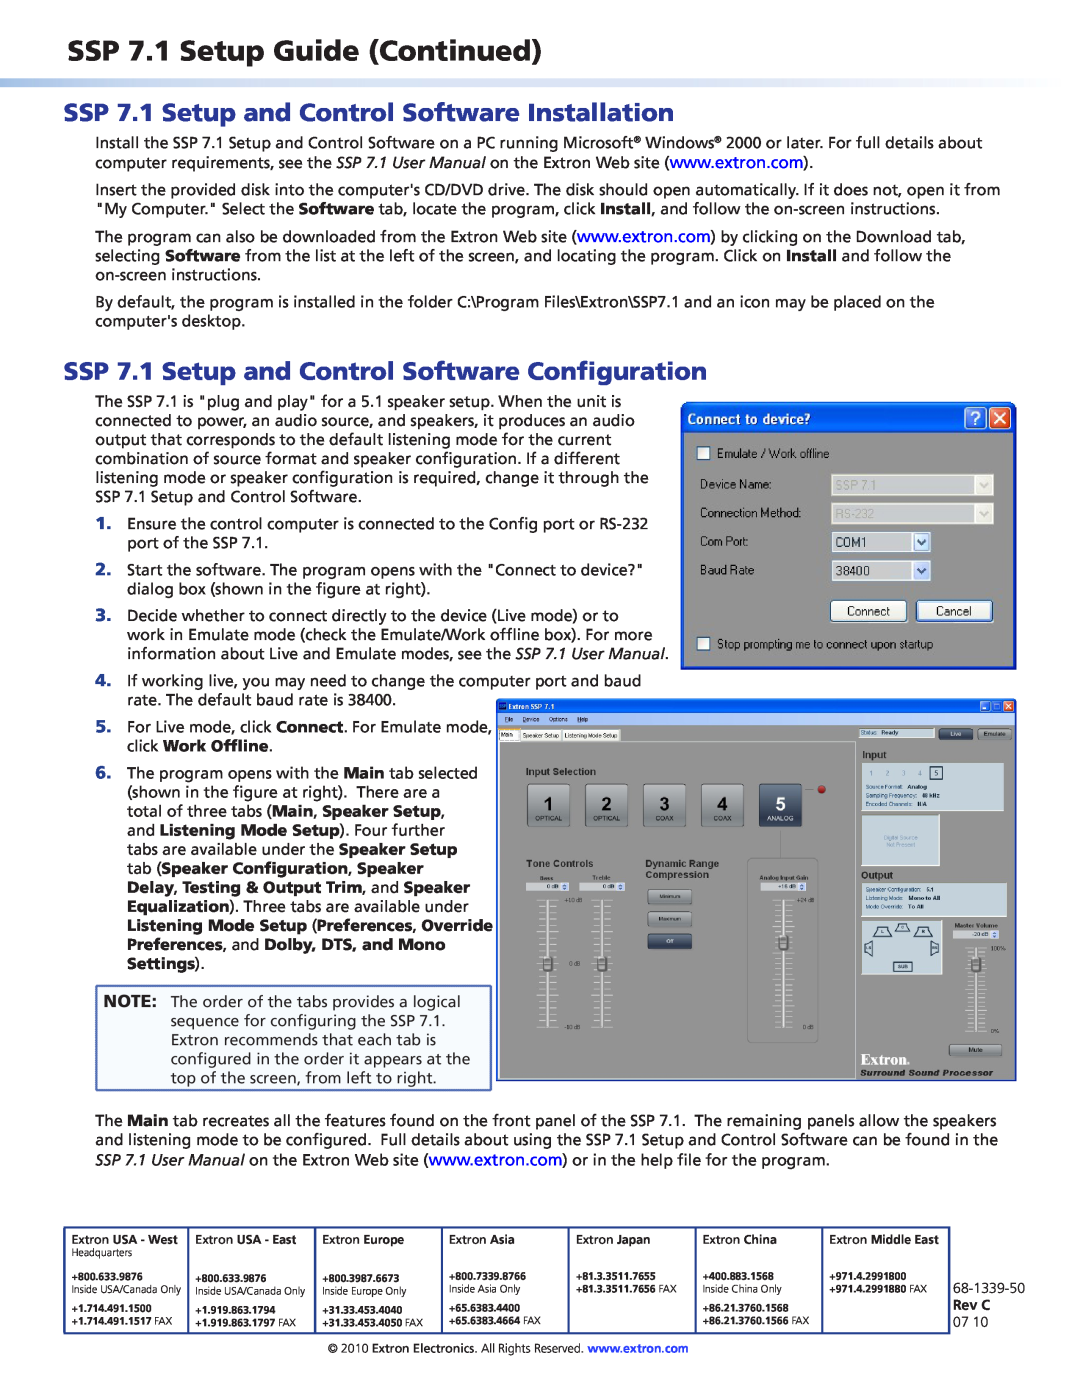 Extron electronic setup guide SSP 7.1 Setup Guide Continued, SSP 7.1 Setup and Control Software Installation 